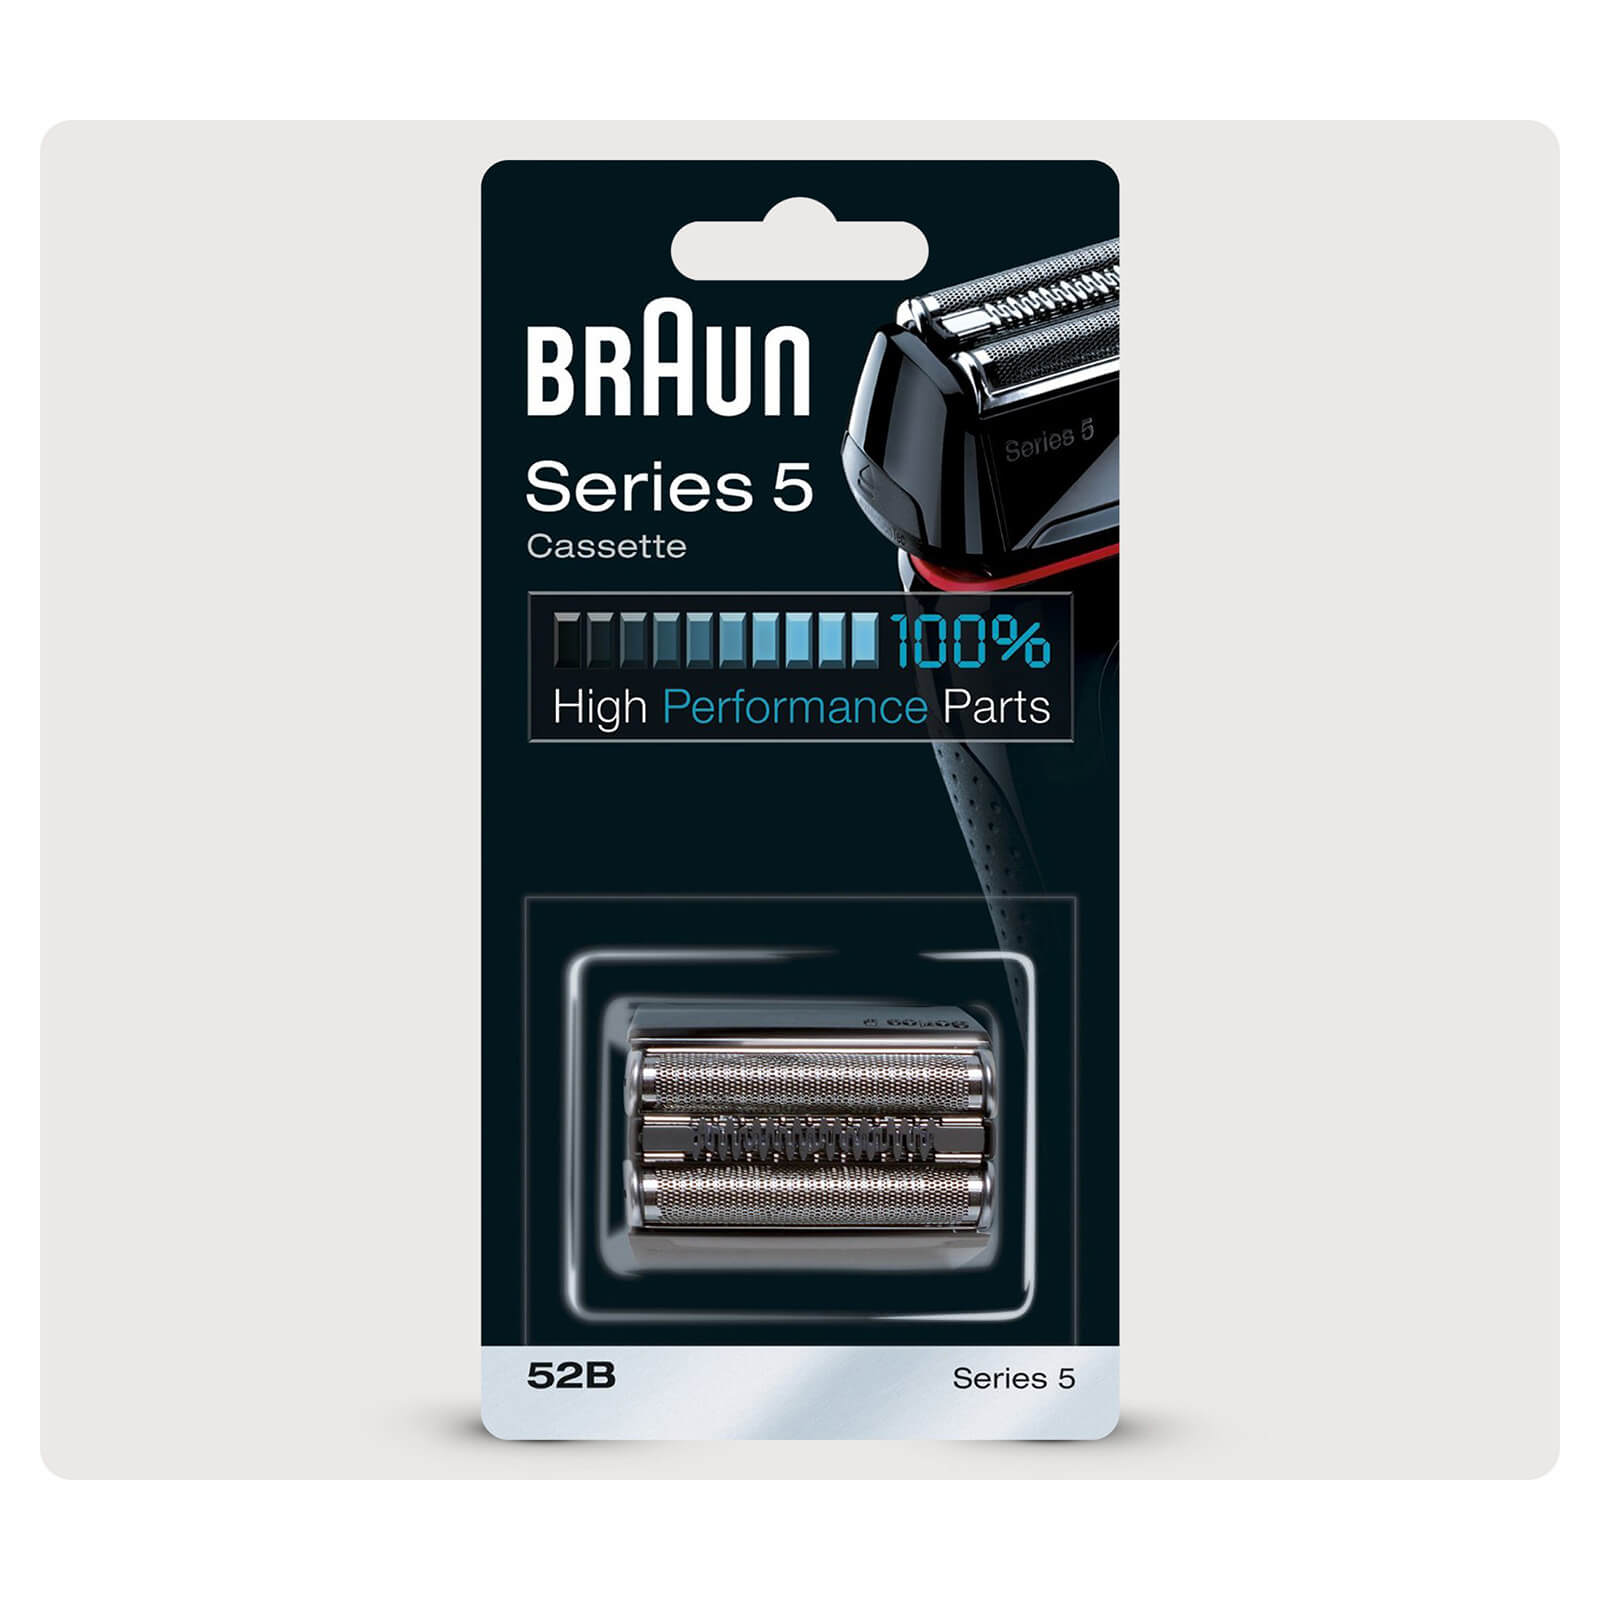 Сетка braun series 5. Braun 5050cc Series 5. Сменное лезвие для Браун 5409. Режущий блок Браун Series 1. Braun Contour x Series 5 лезвия.